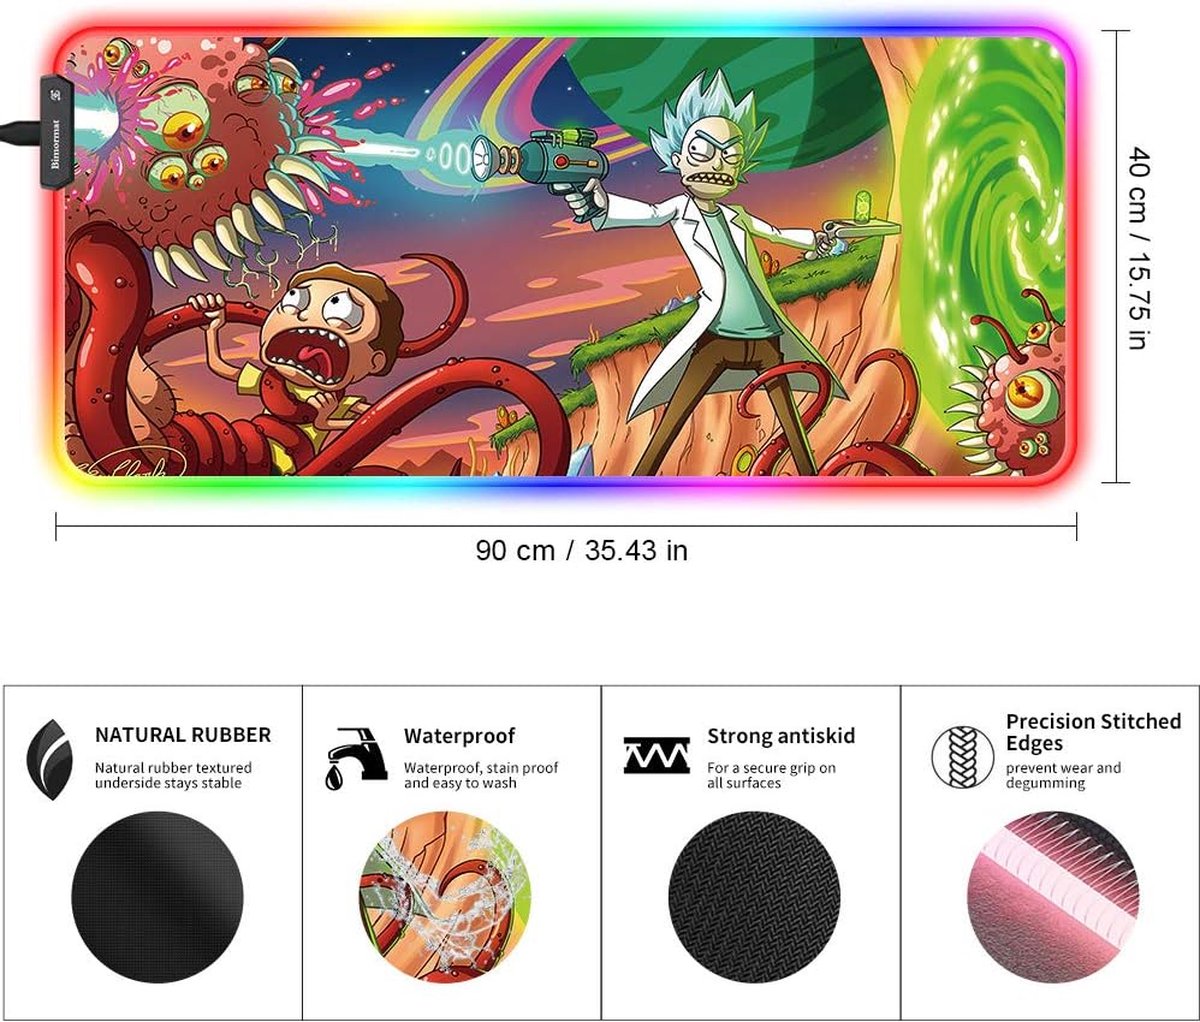 Anime RGB Gaming muismat, 900 x 400 x 3 mm grote muismat XXL, led-bureauonderlegger met antislip rubberen basis en duurzame genaaide randen, voor gepersonaliseerde gamers (90 x 40 gunguai)